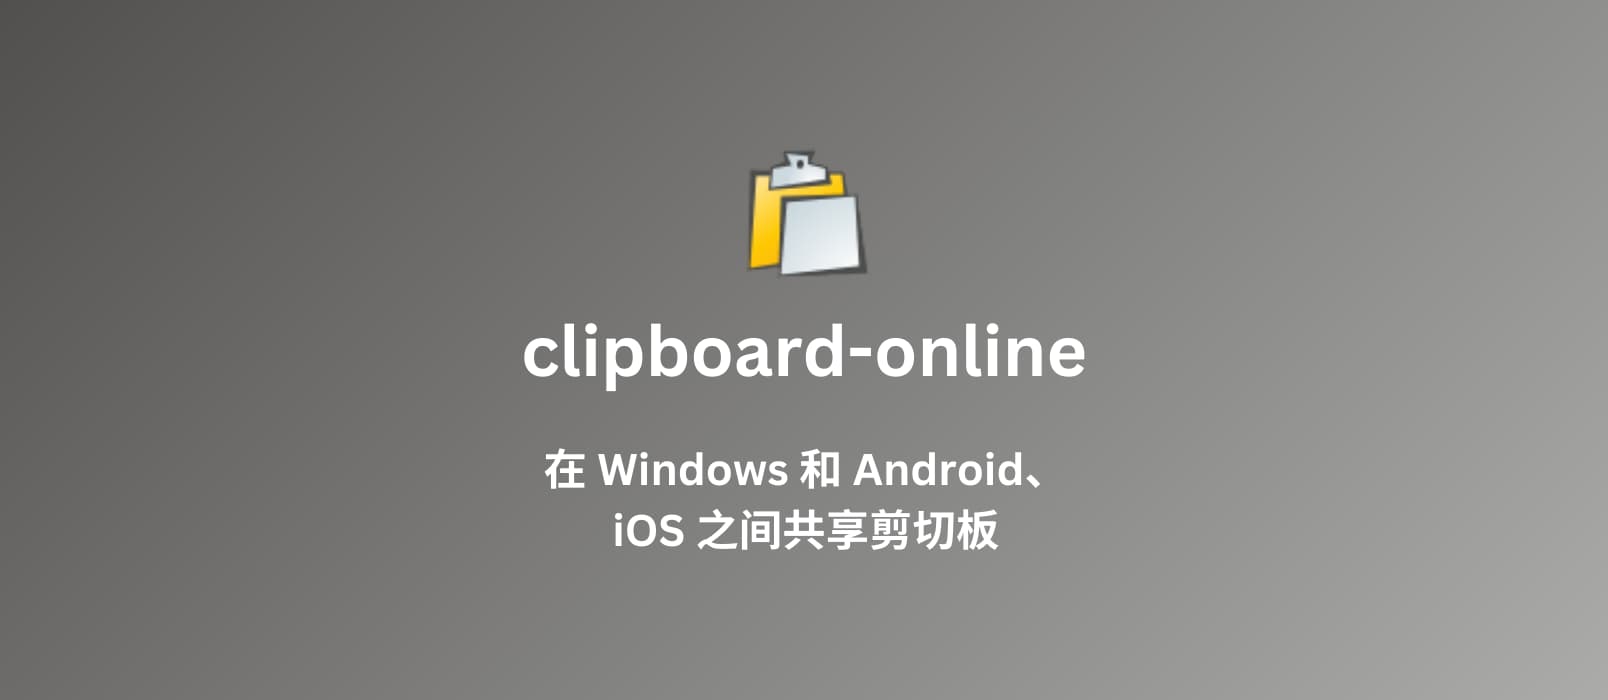 clipboard-online - 在 Windows 和 iOS、Android 之间分享剪切板